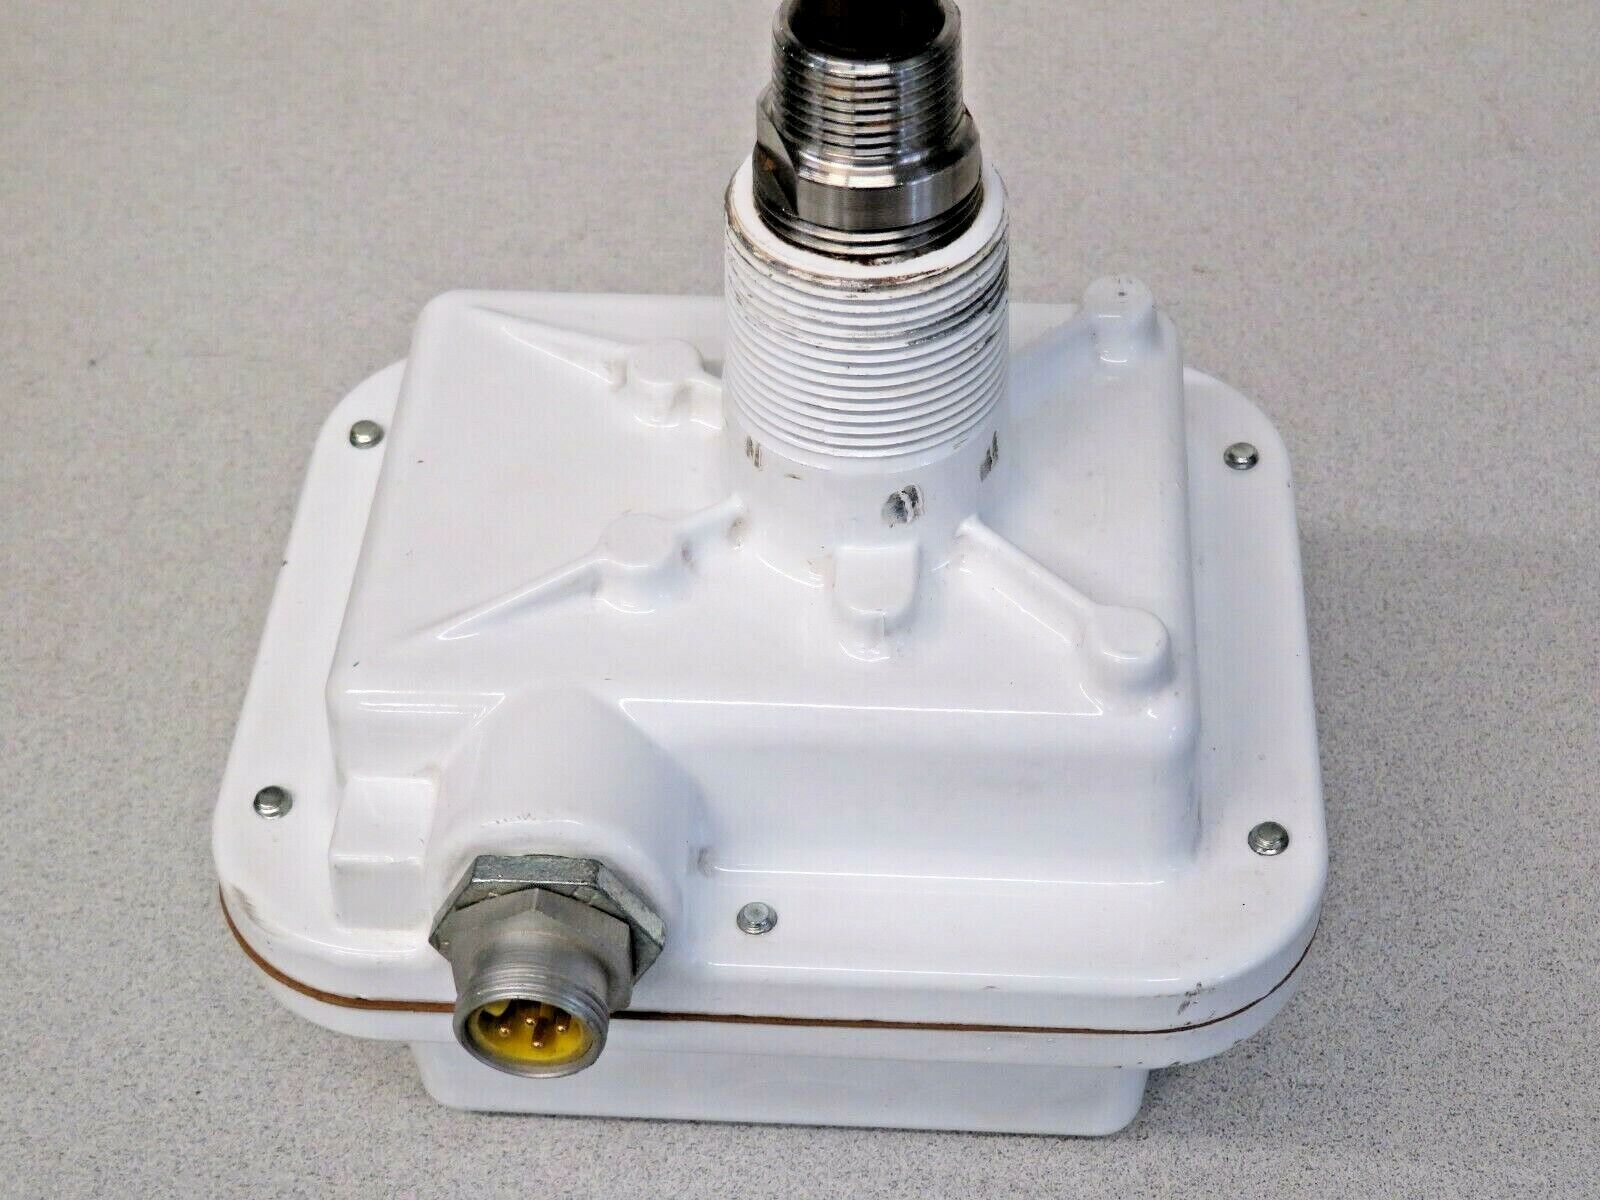 Bindicator RF805G1A Level Indicator 120VAC